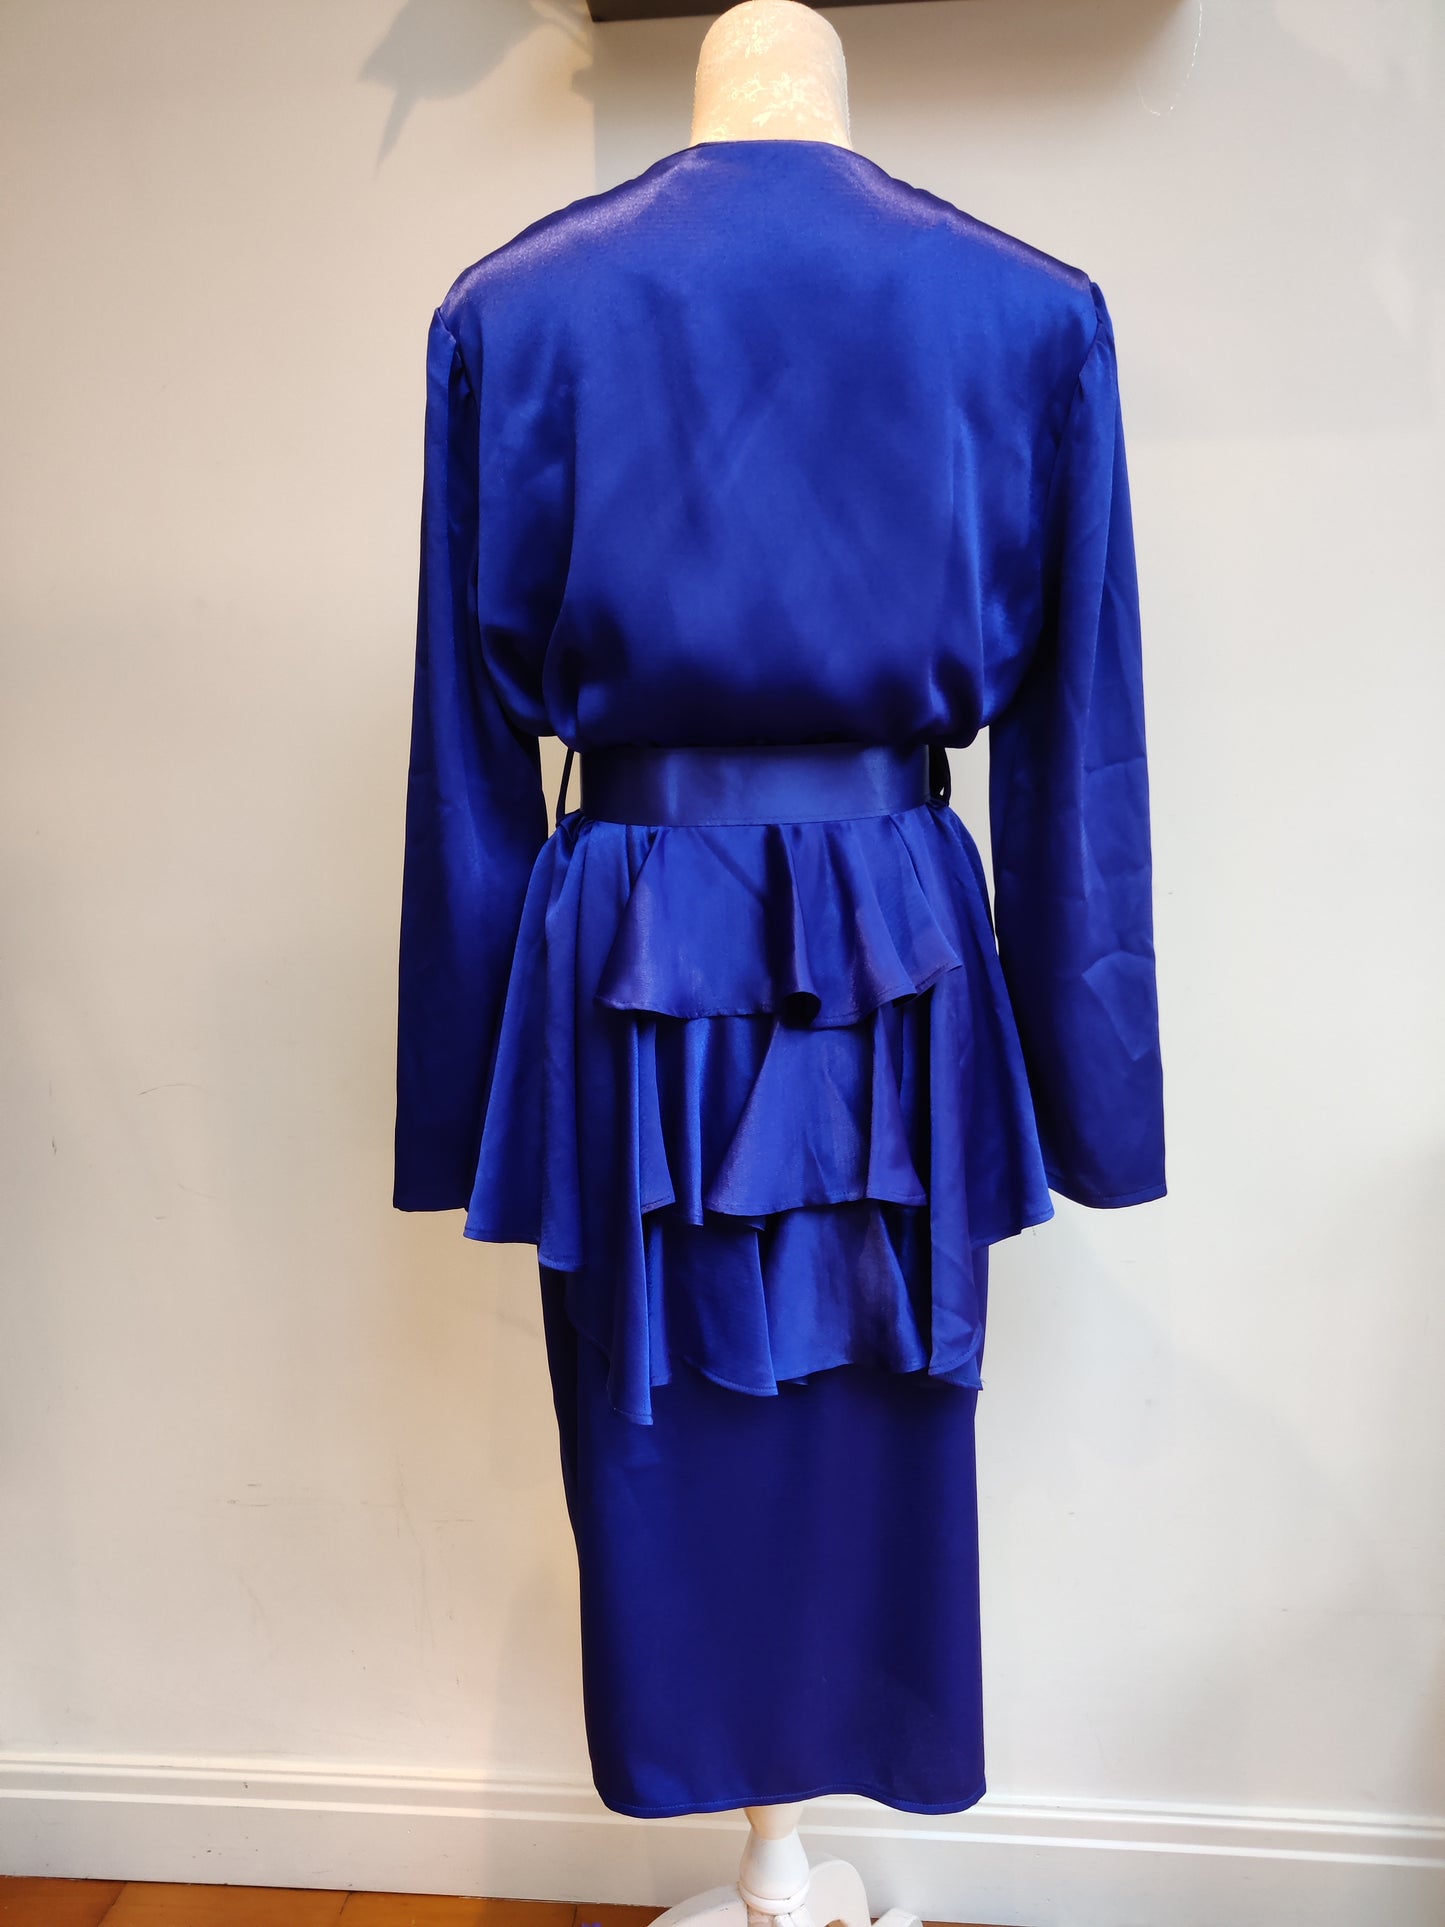 Blue vintage midi dress with amazing frill peplum back.